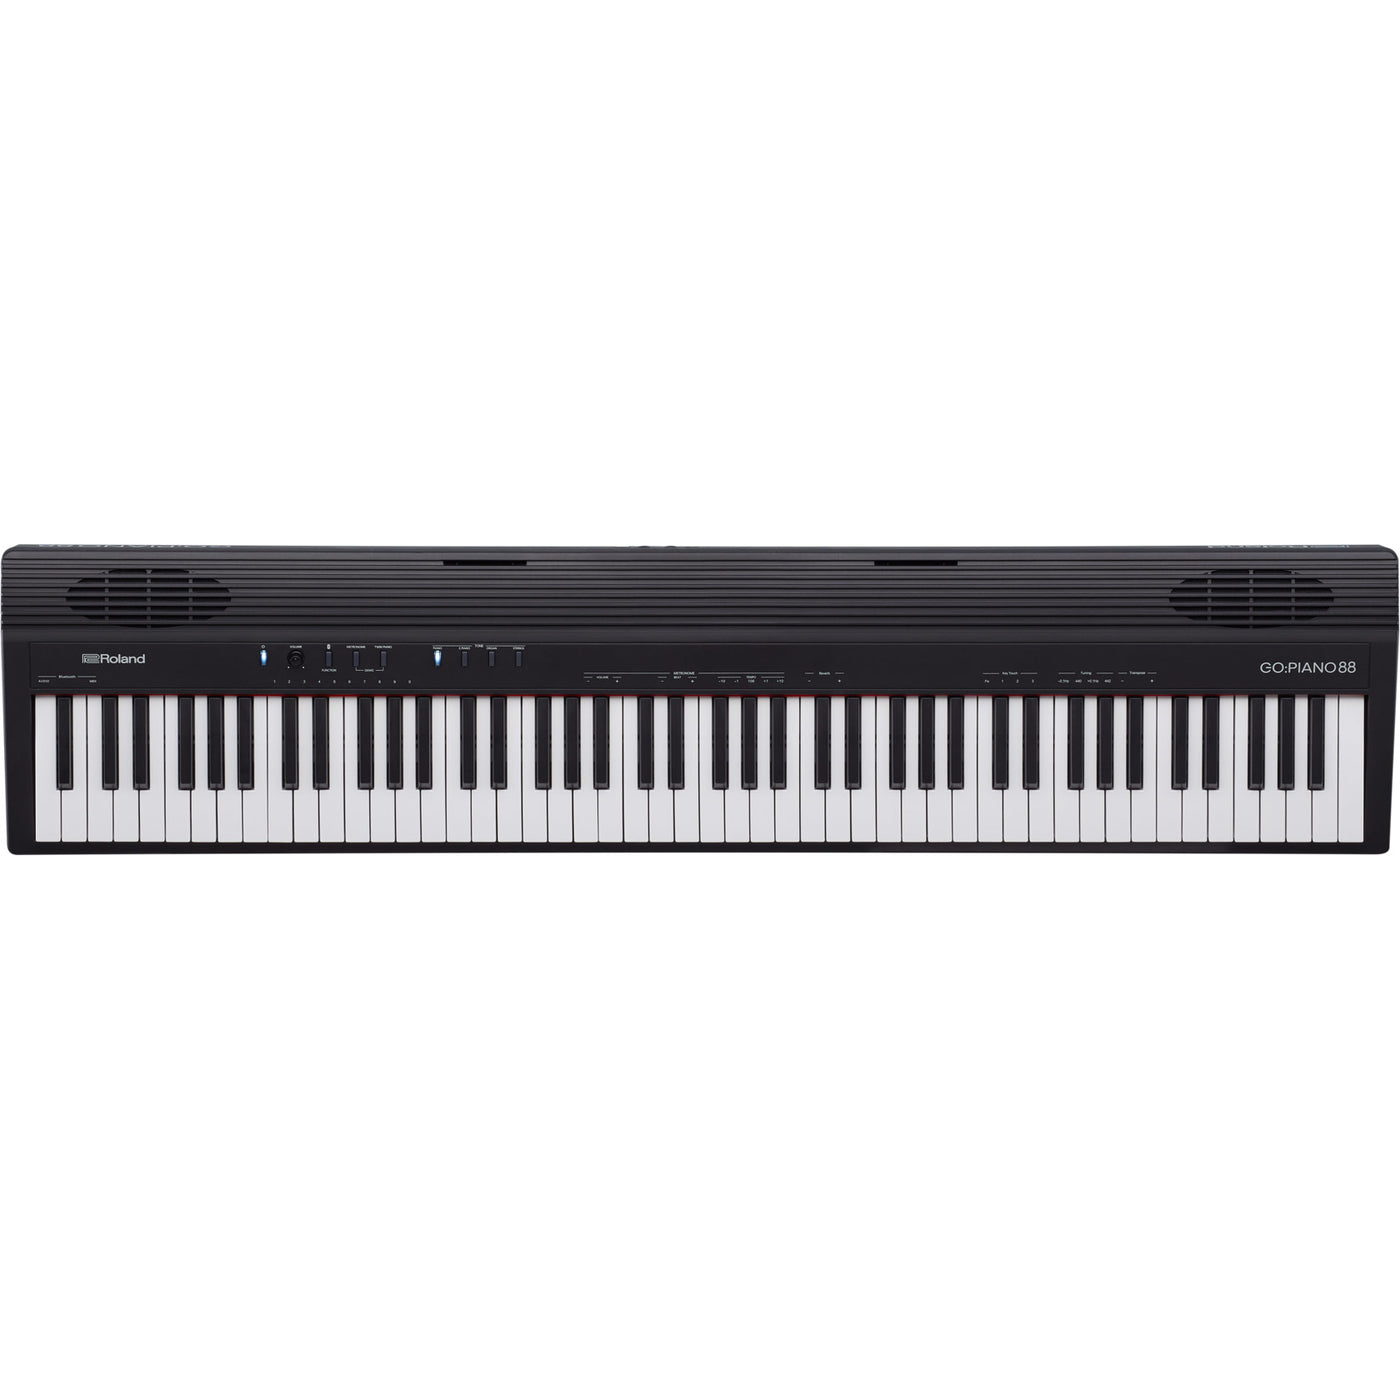 full piano keyboard